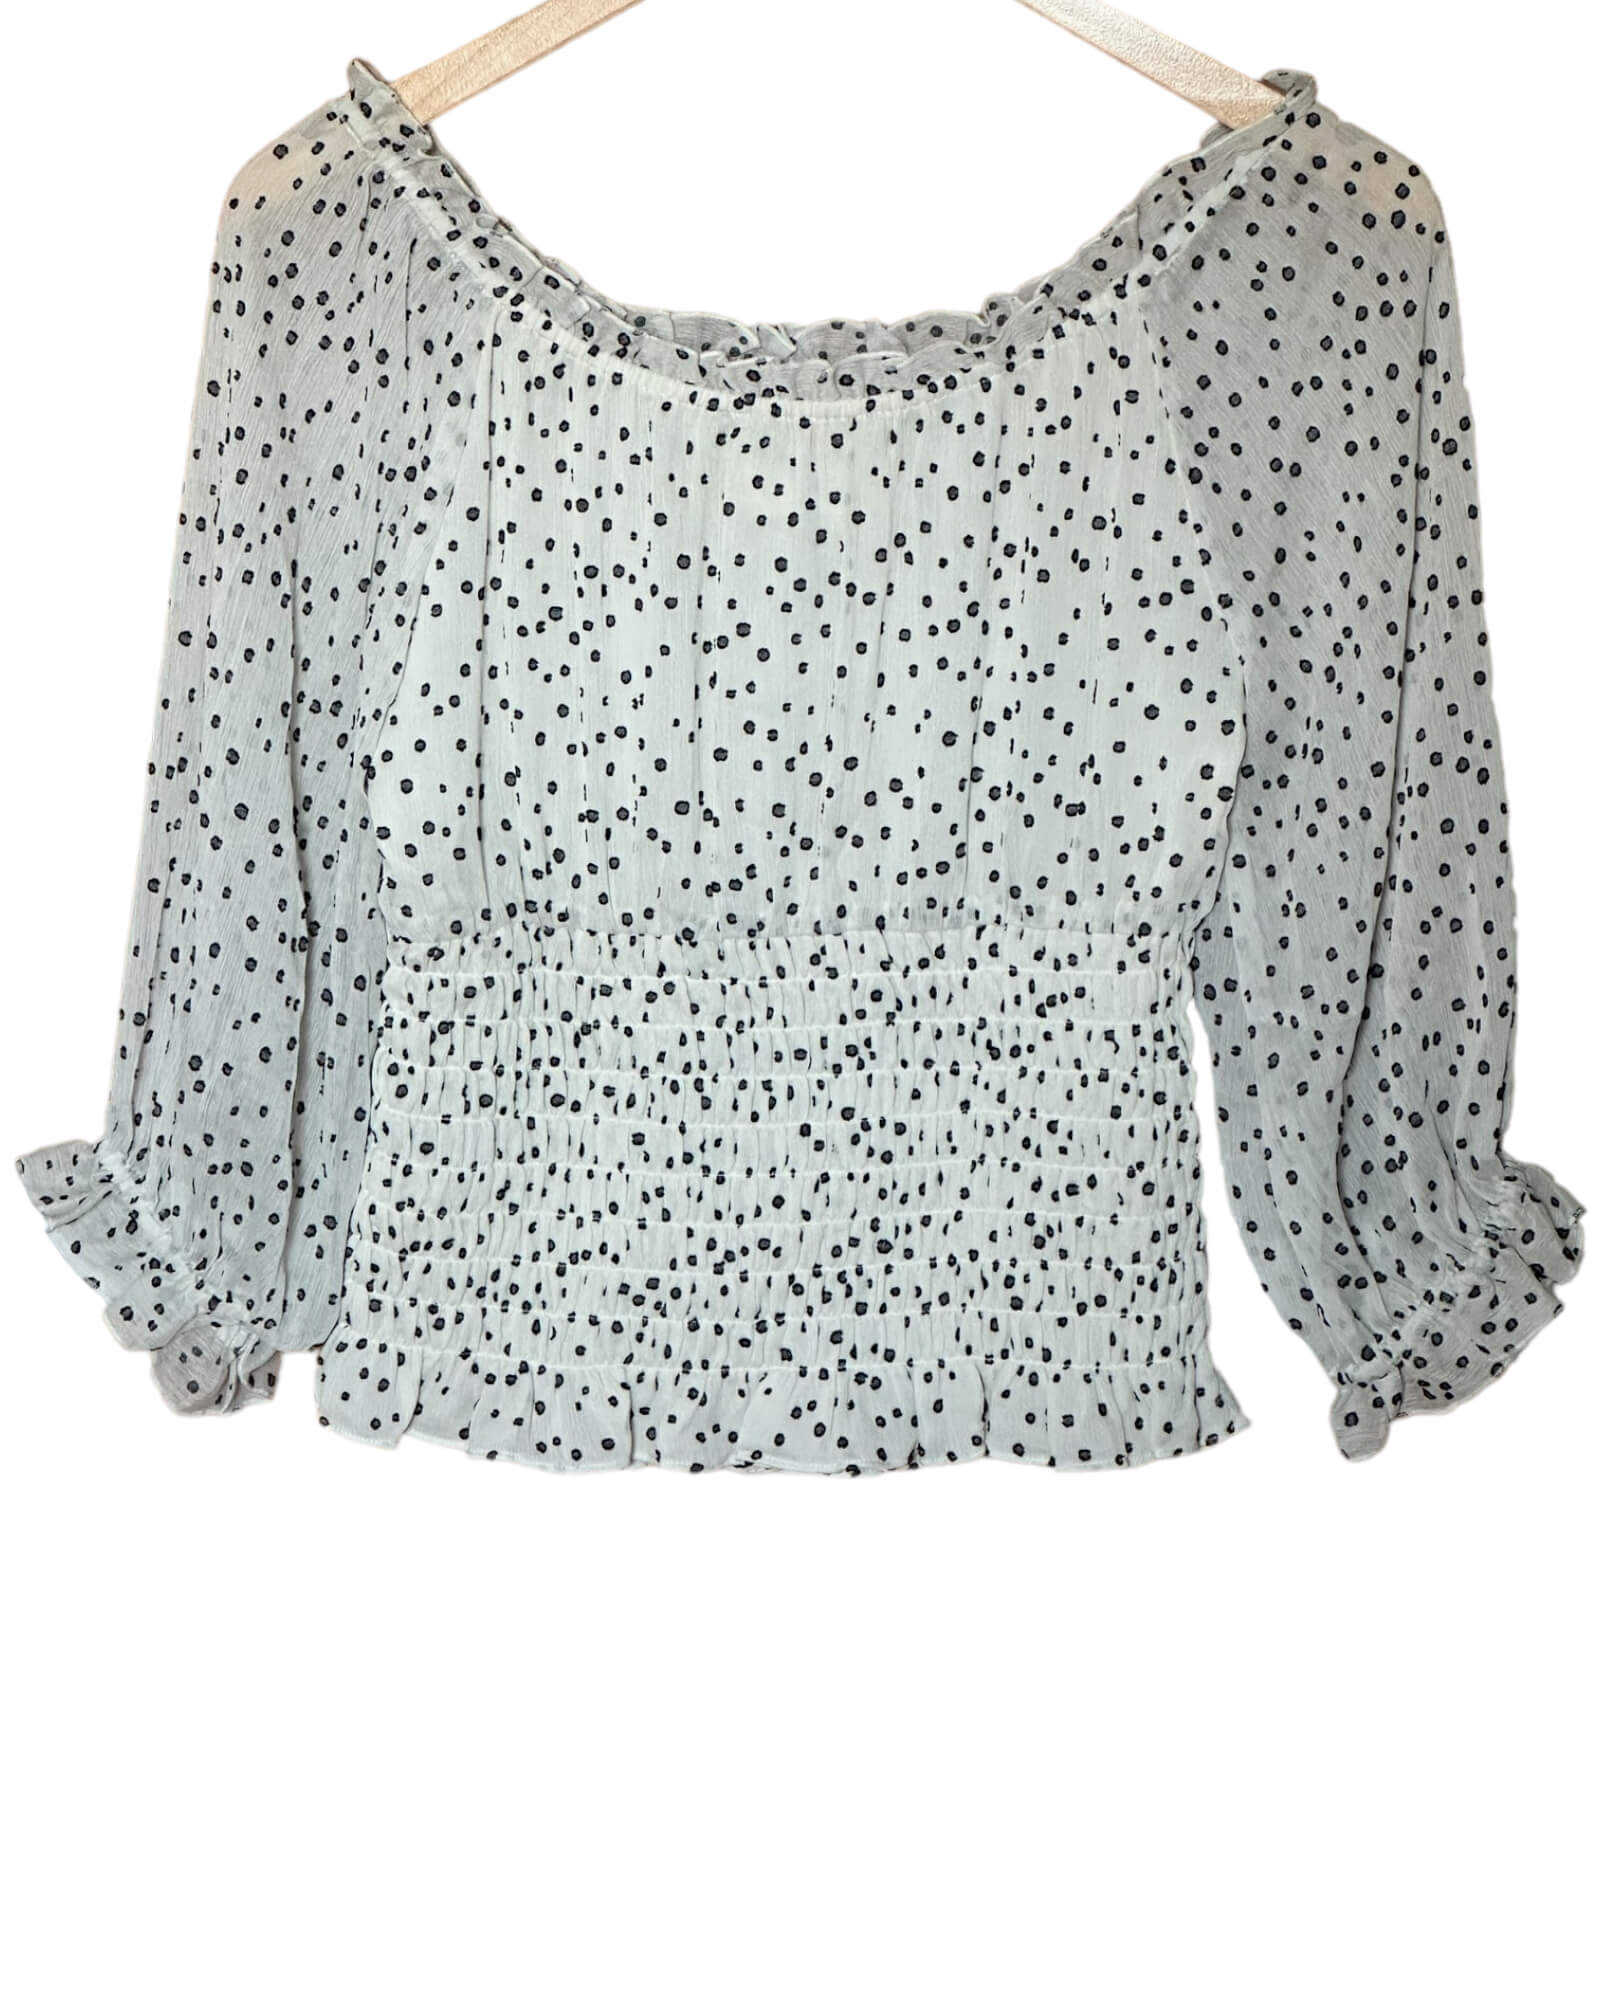 Soft Summer ANTHROPOLOGIE scatter dot blouse top